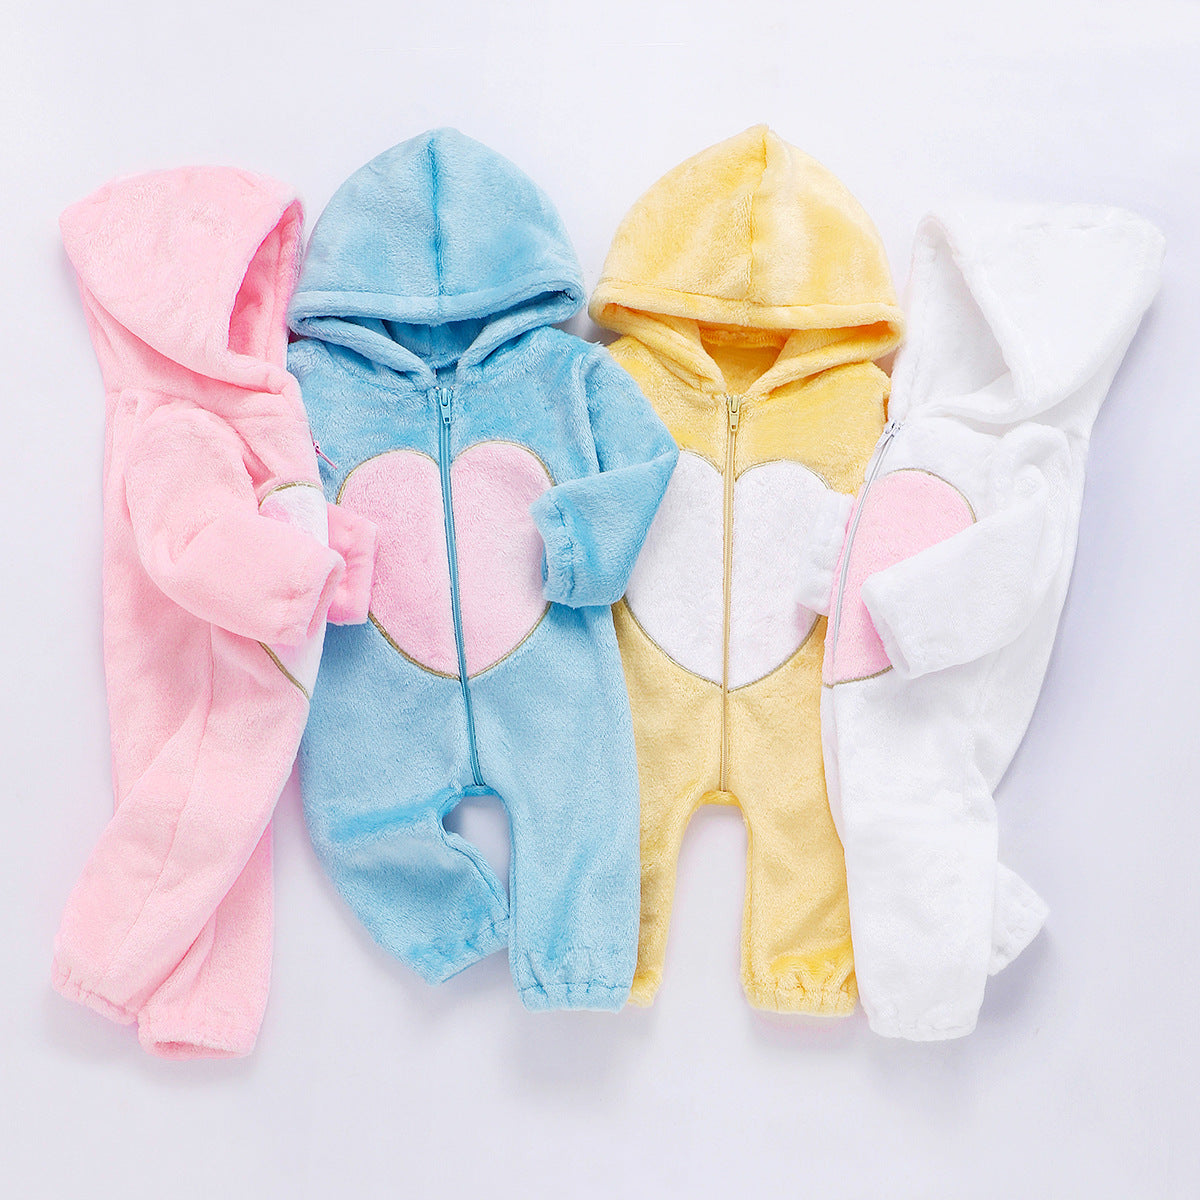 Baby Plush Love Jumpsuits Crawl Newborn Romper Outwear